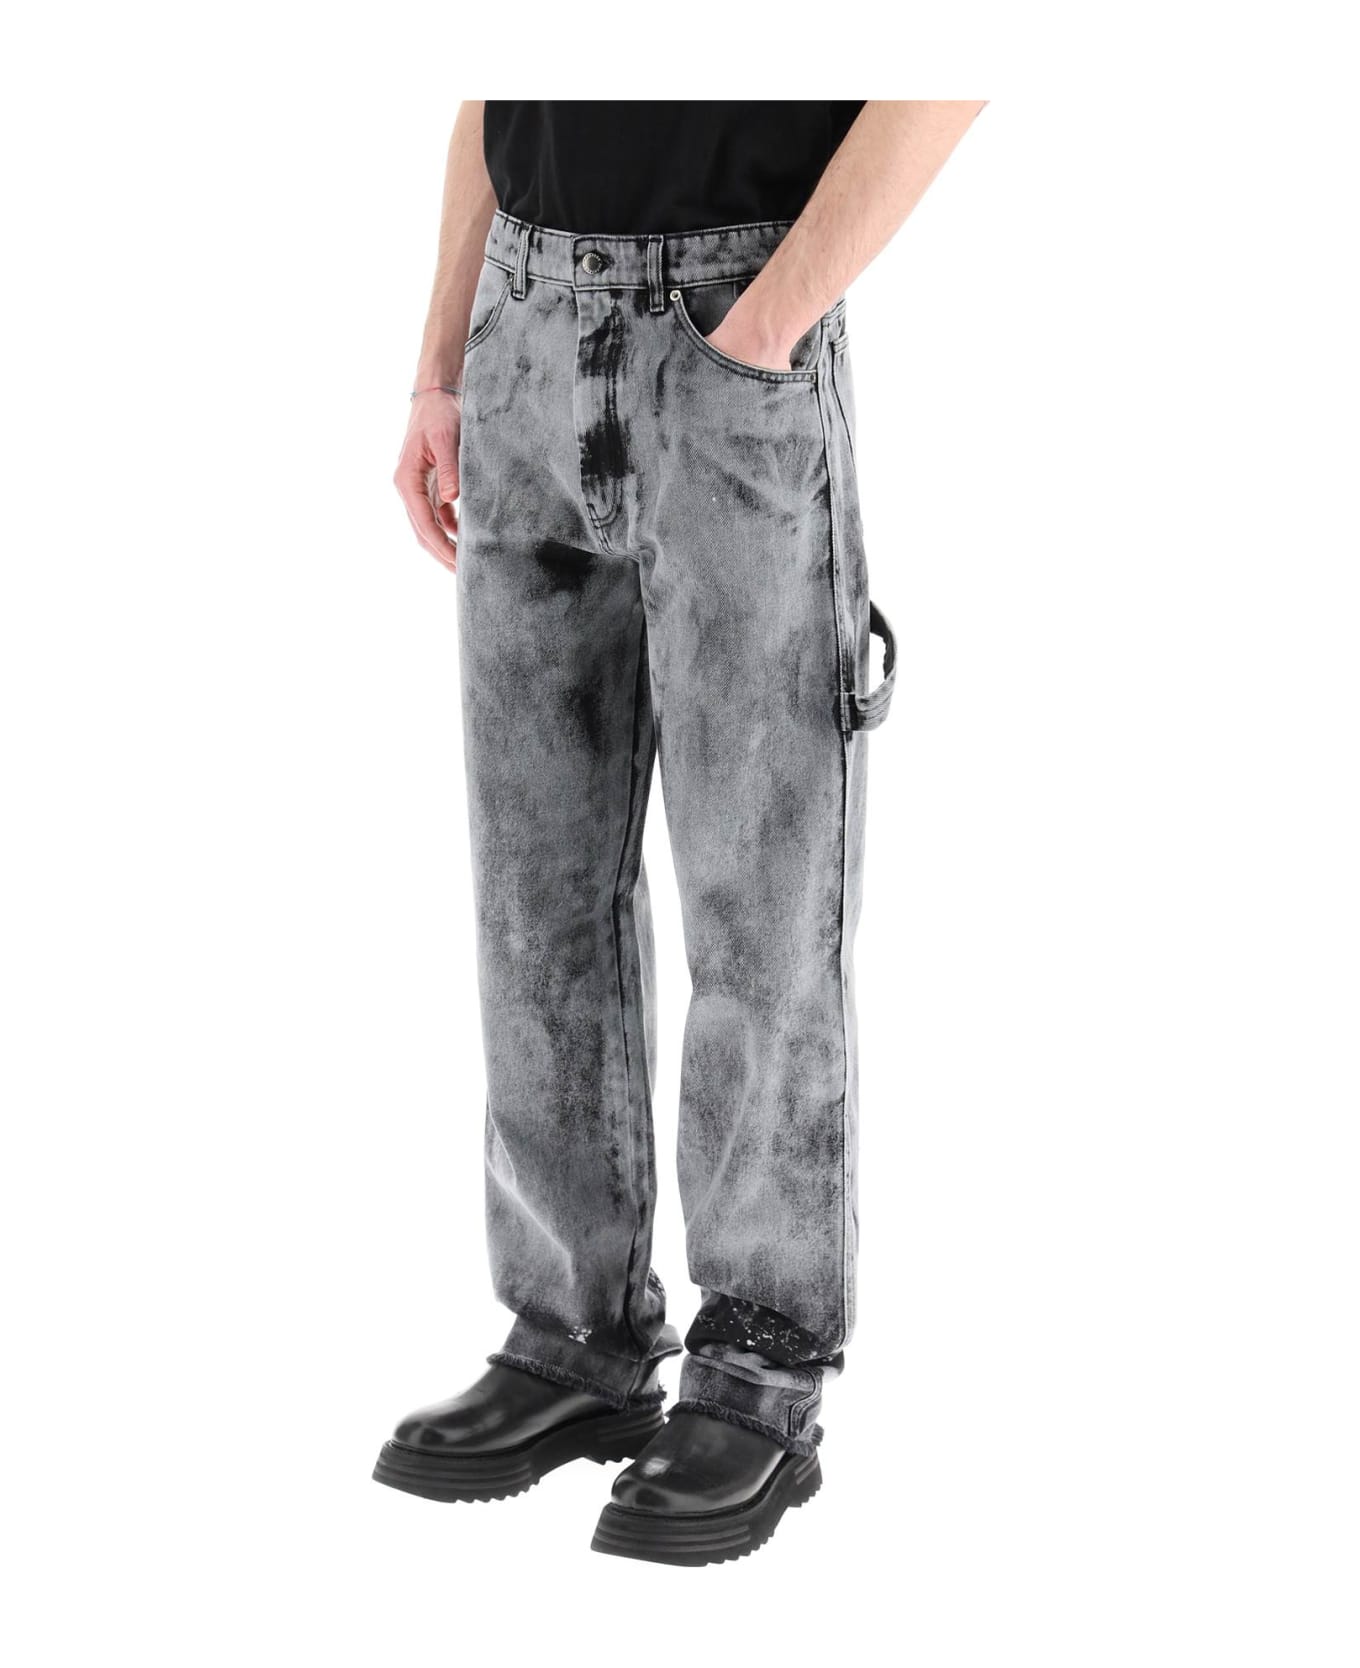 DARKPARK 'john' Workwear Jeans - BLACK GREY (Grey)